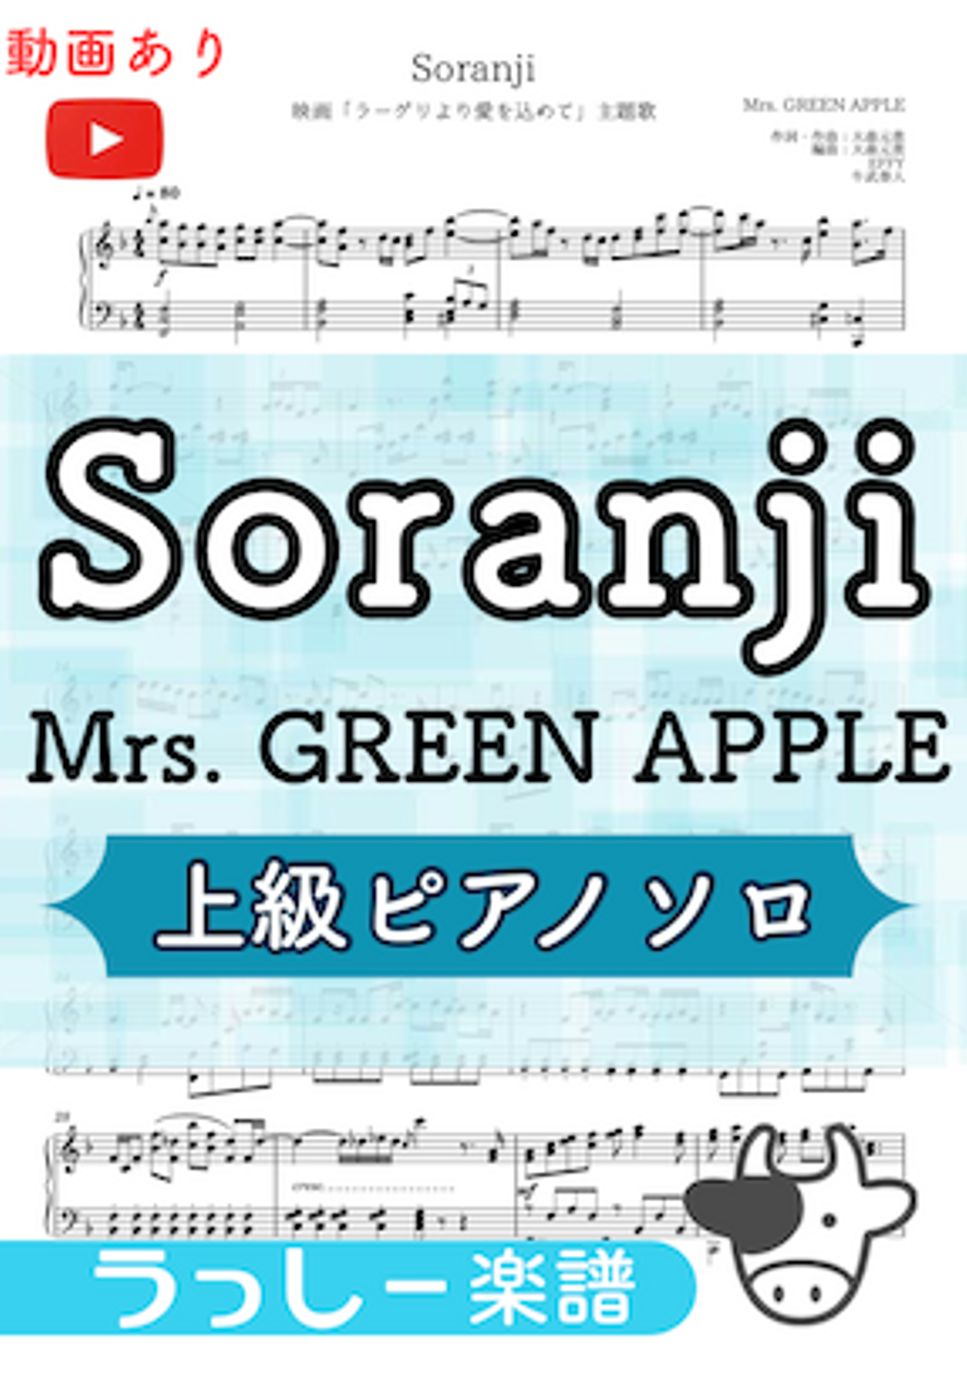 Mrs. GREEN APPLE - Soranji by 牛武奏人